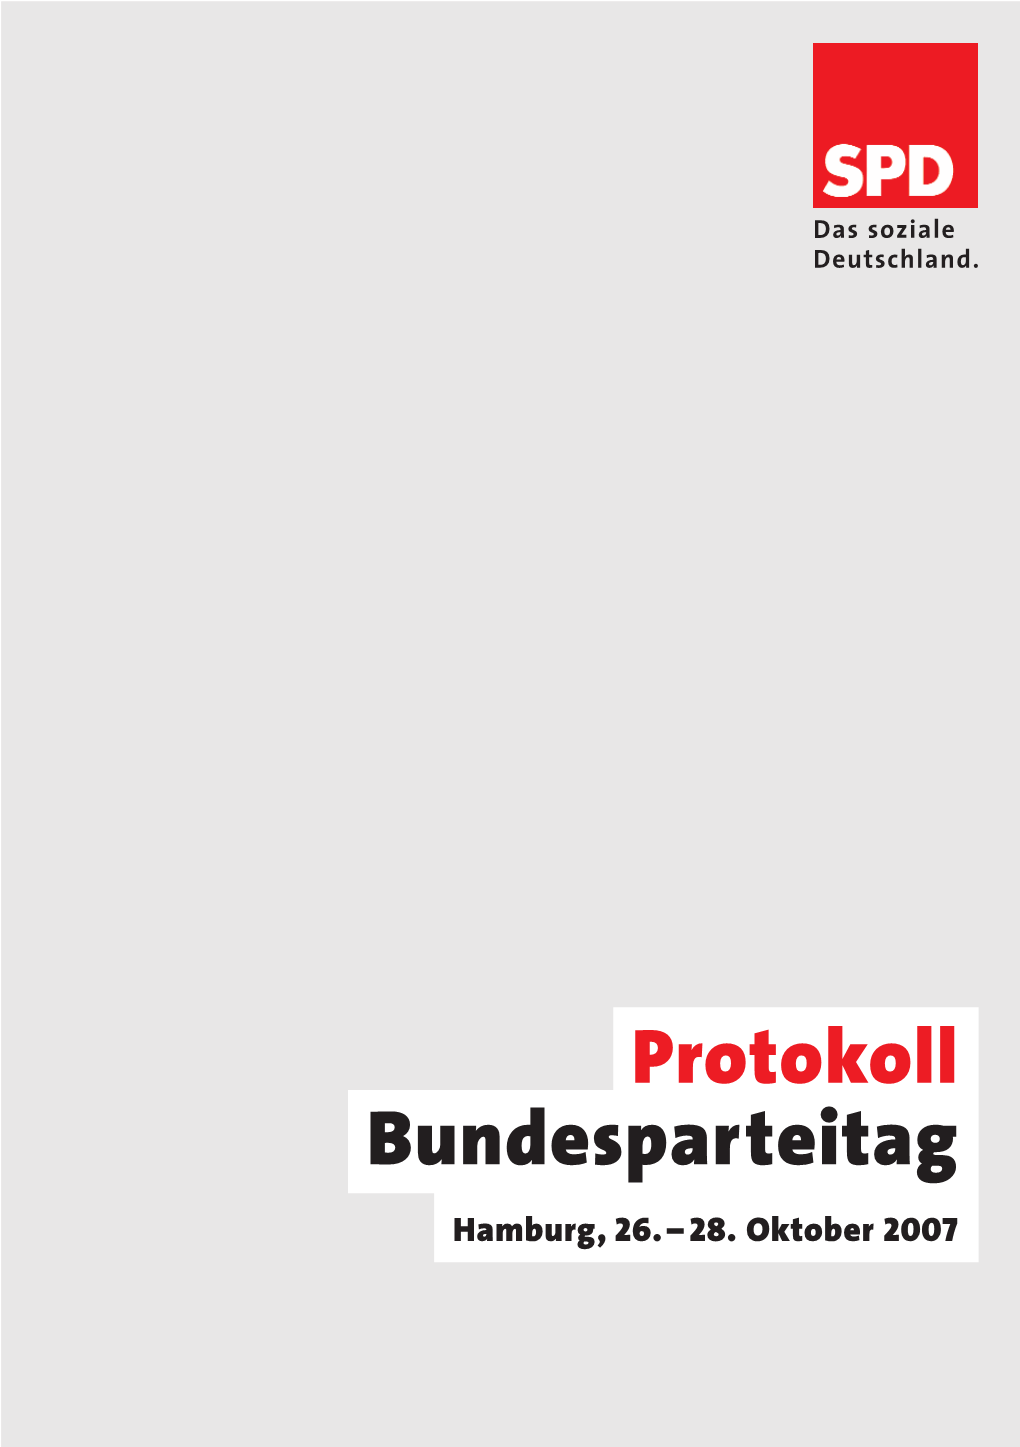 Protokoll Bundesparteitag Hamburg, 26.– 28